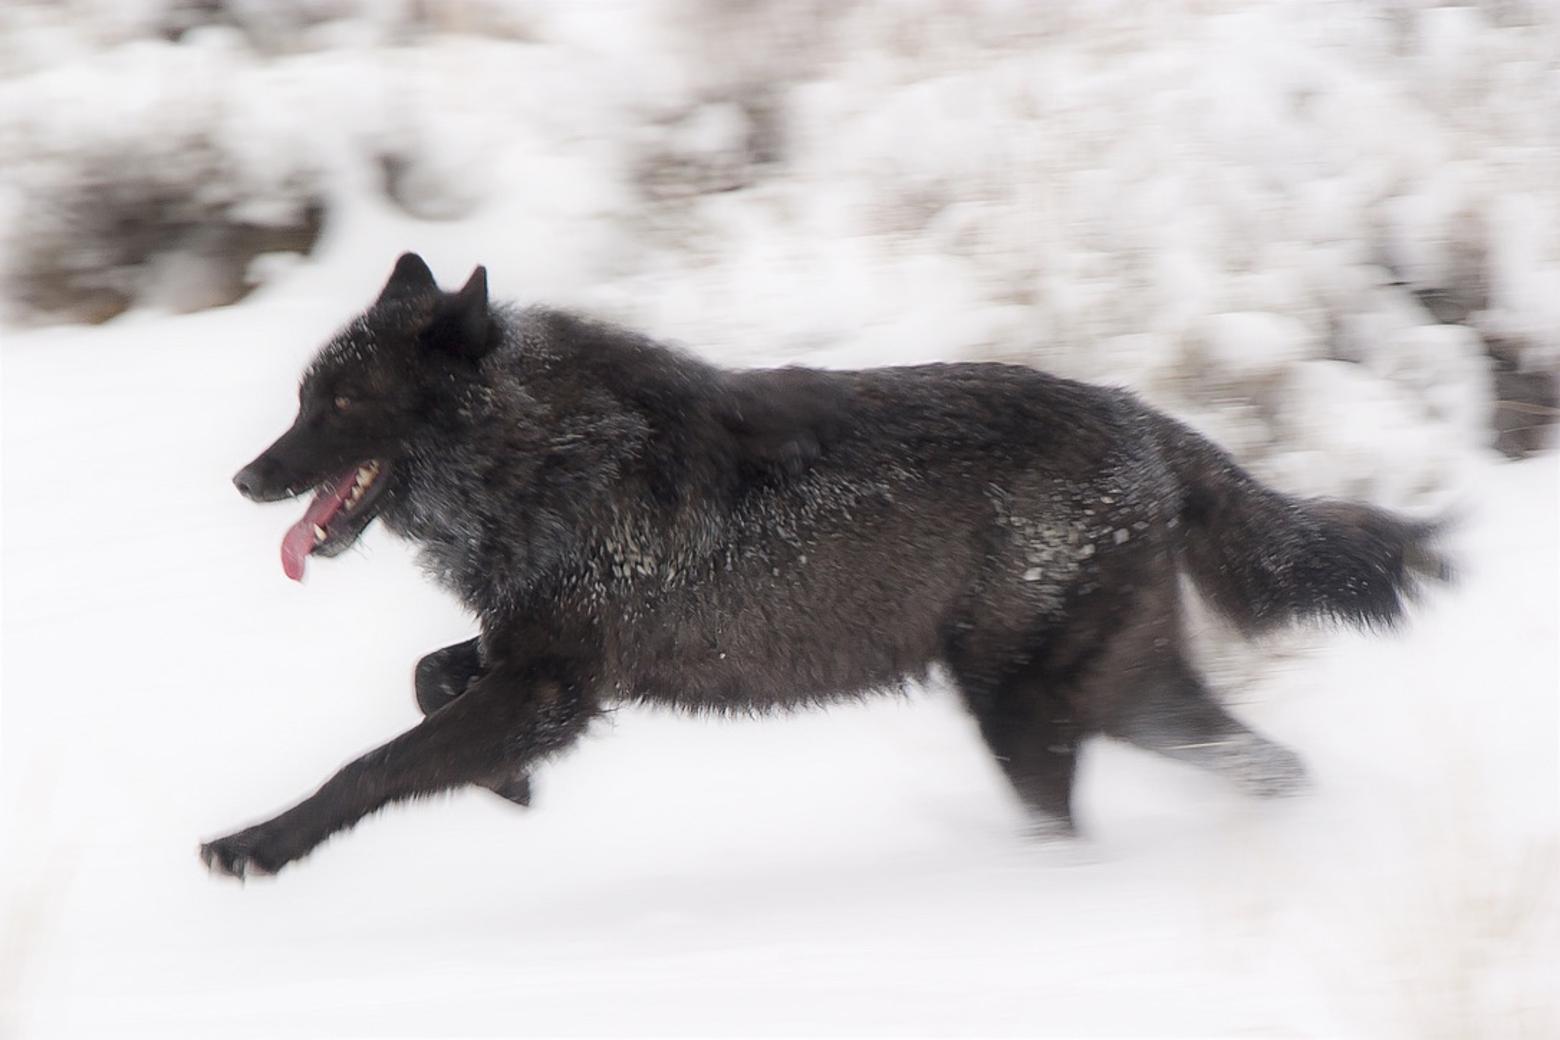 Wolf 302 on a winter's dash. Photo courtesy Doug Dance